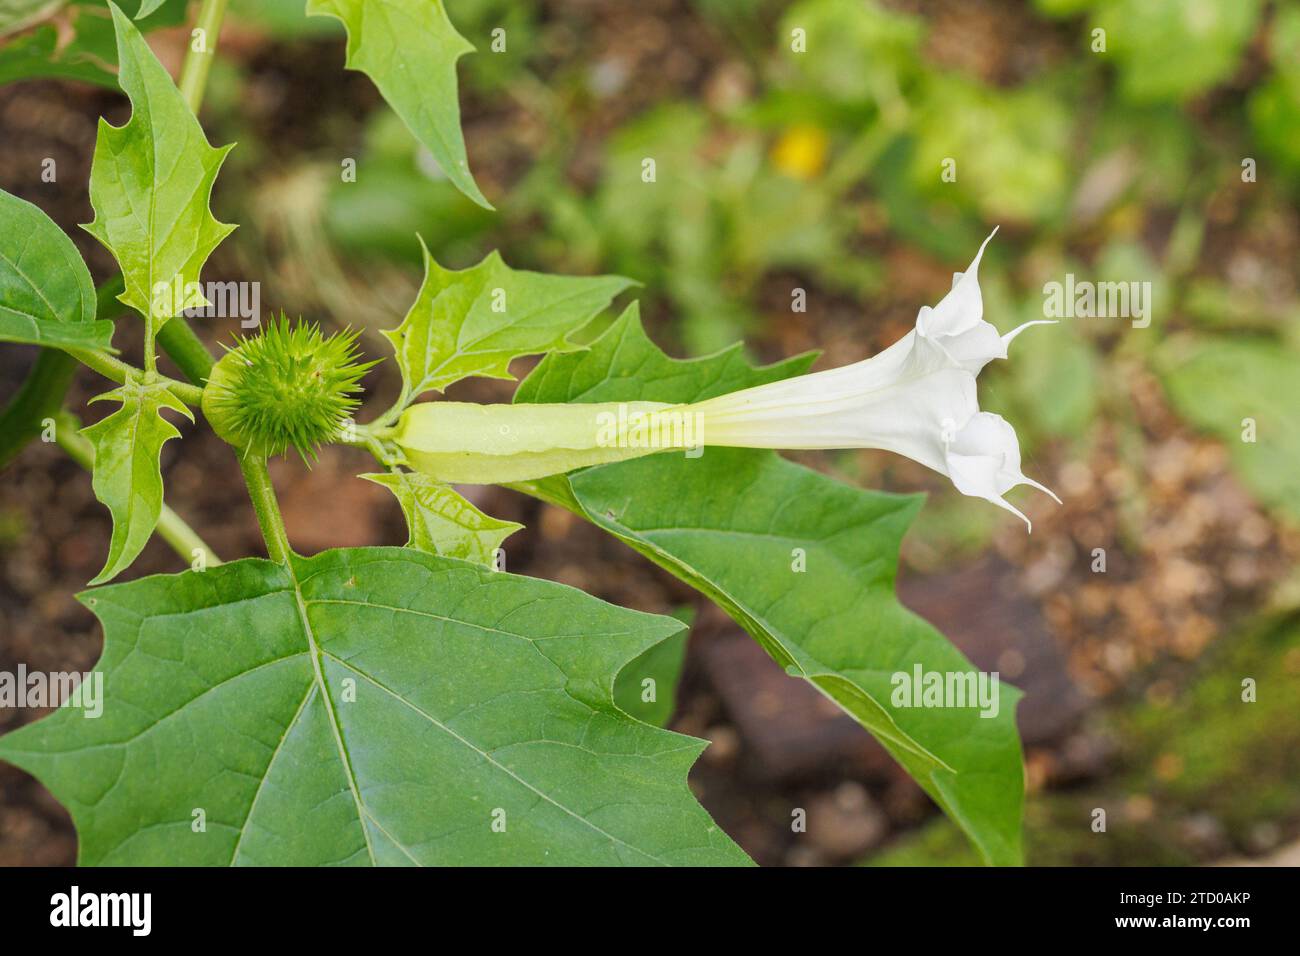 Stramonio, jimsonweed, thornapple, jimson Weed (Datura stramonium), fiore un frutto immaturo, Germania, Baviera Foto Stock